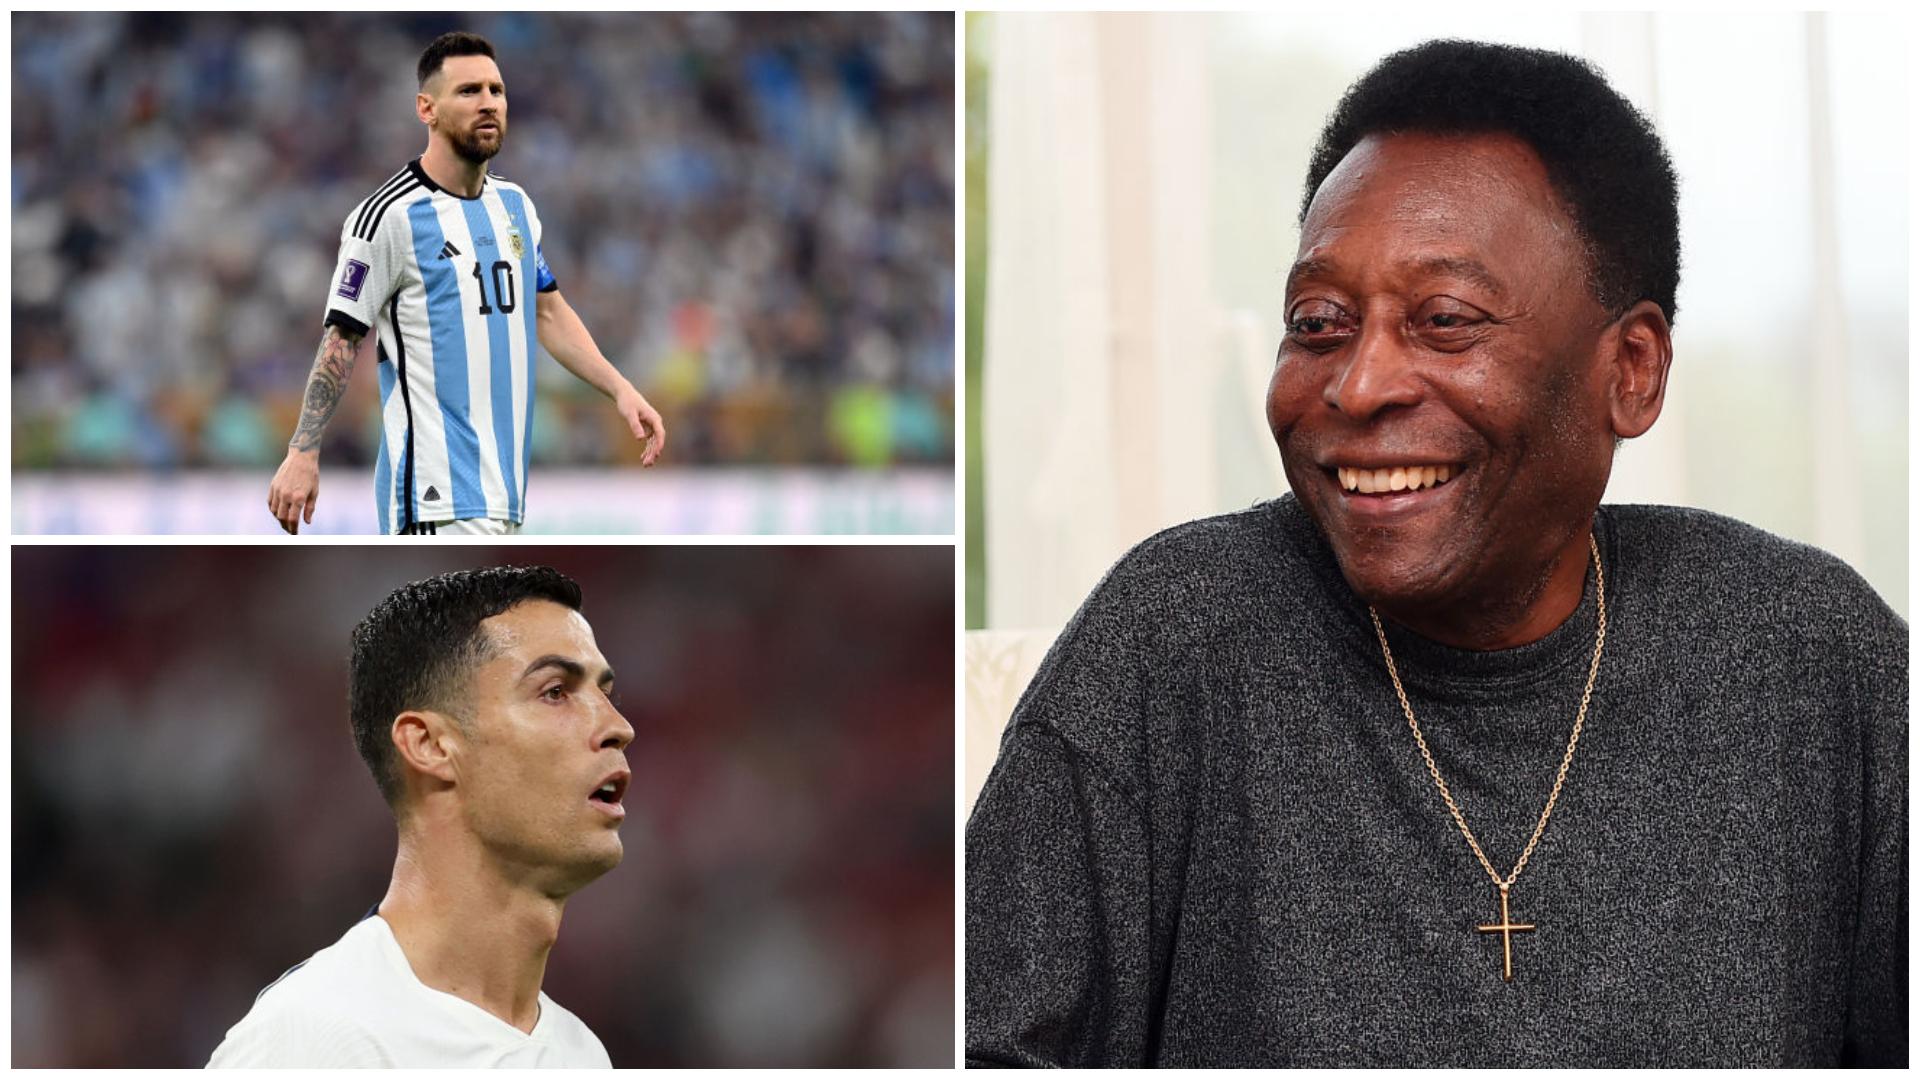 Colaj cu Pele, Messi și Ronaldo